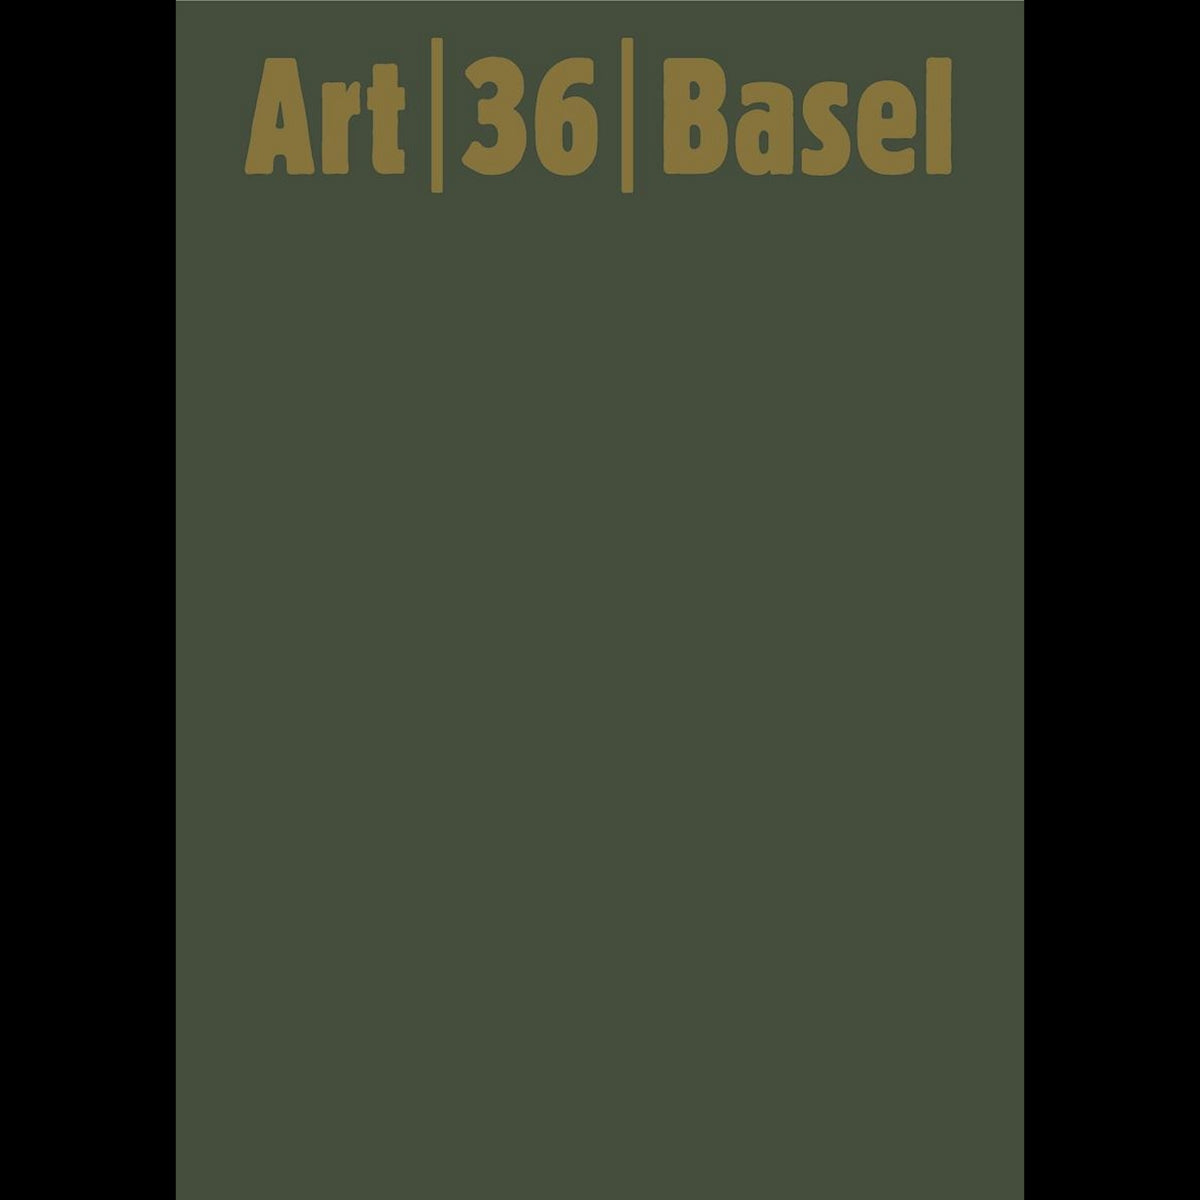 Coverbild Art 36 Basel